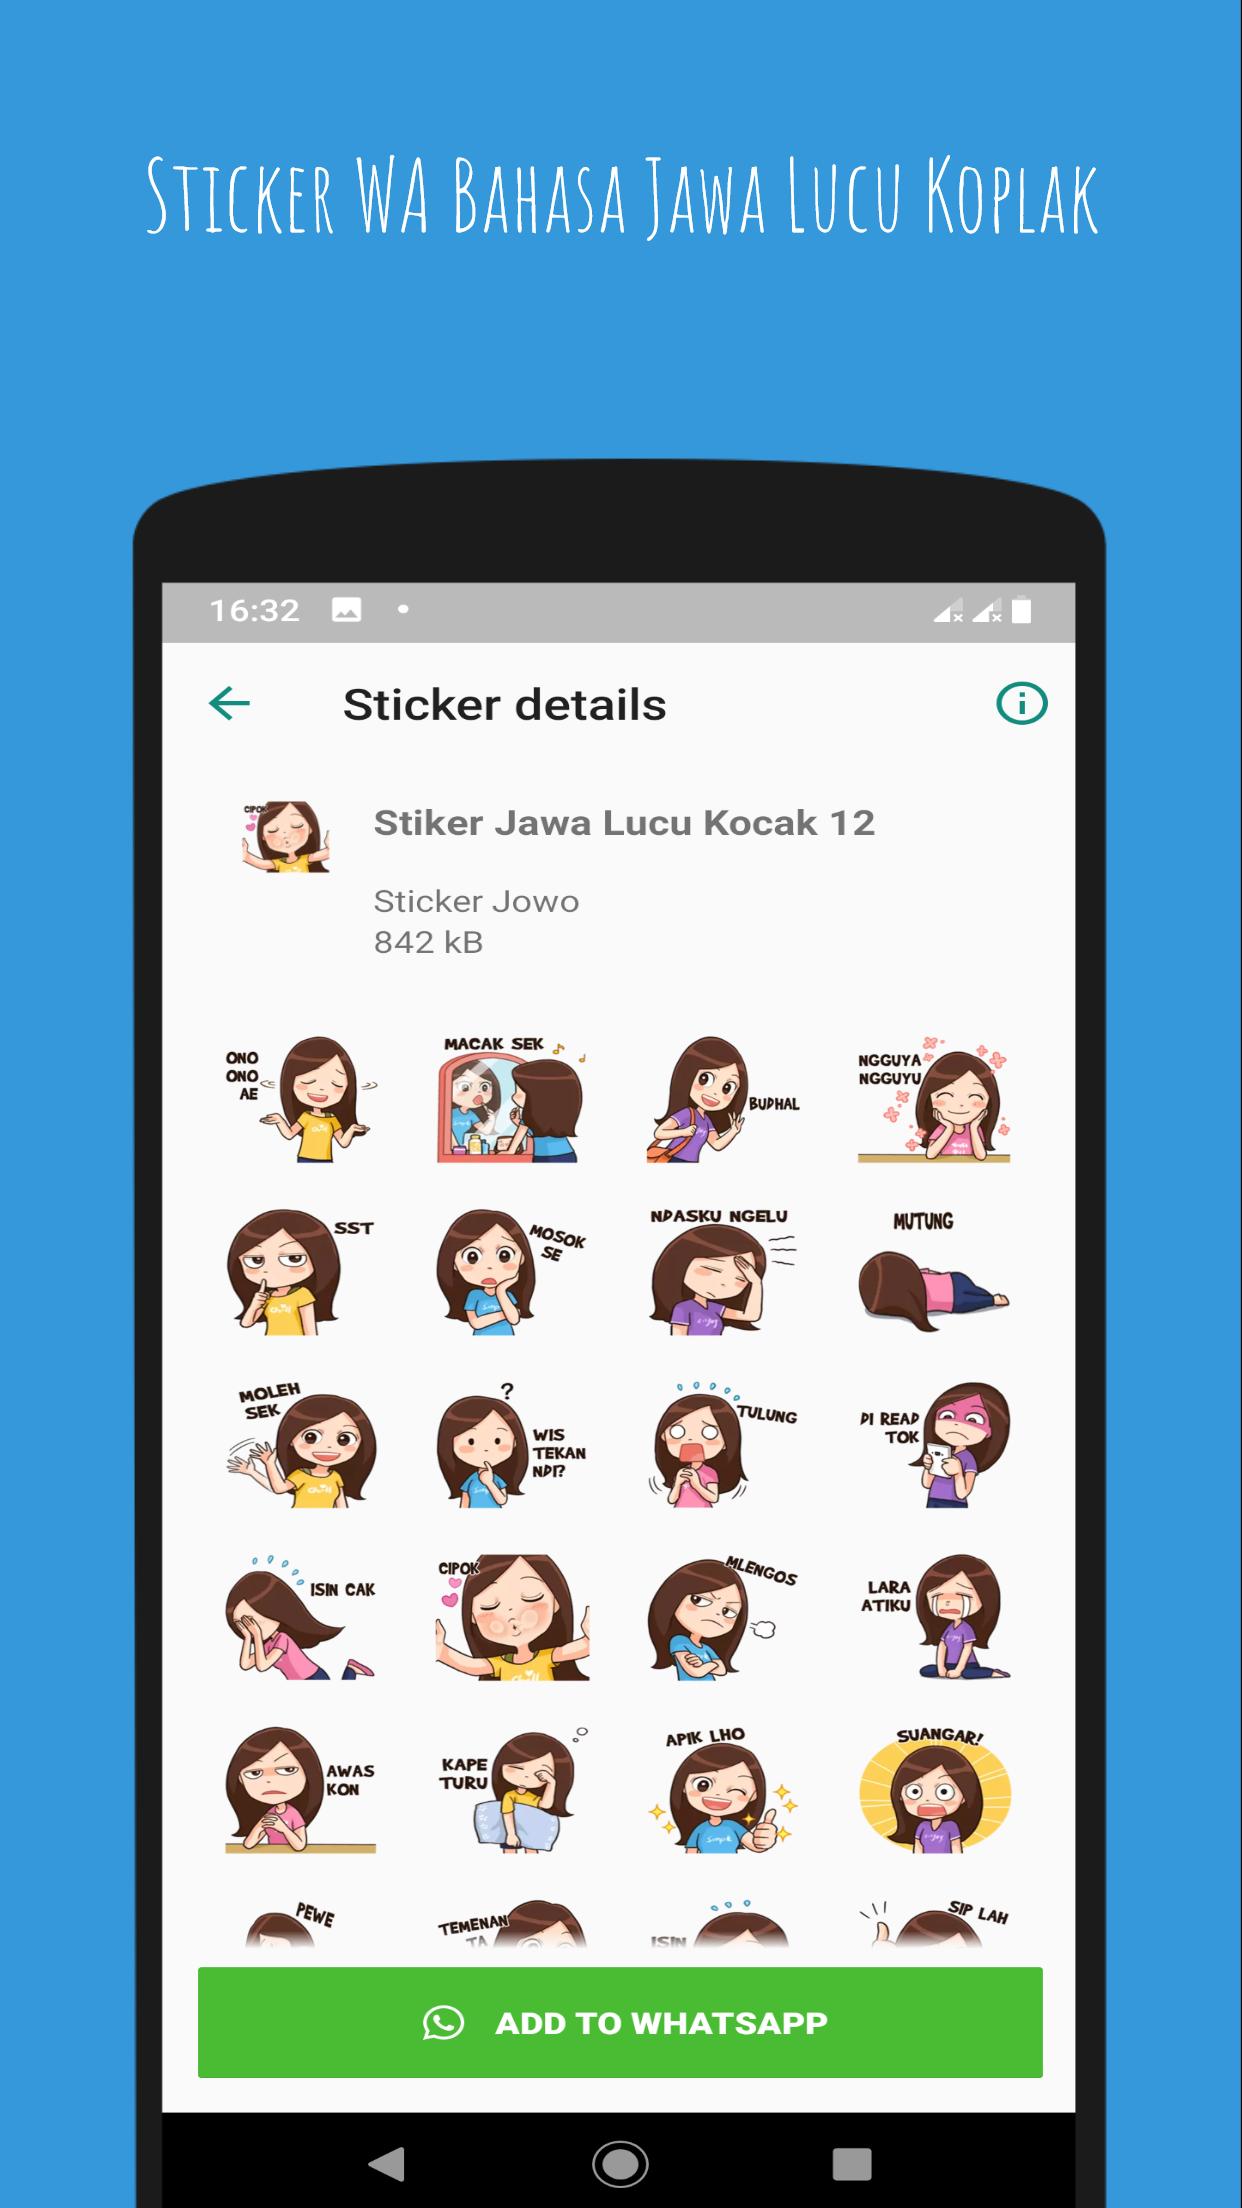 Sticker Wa Bahasa Jawa Lucu Koplak For Android Apk Download